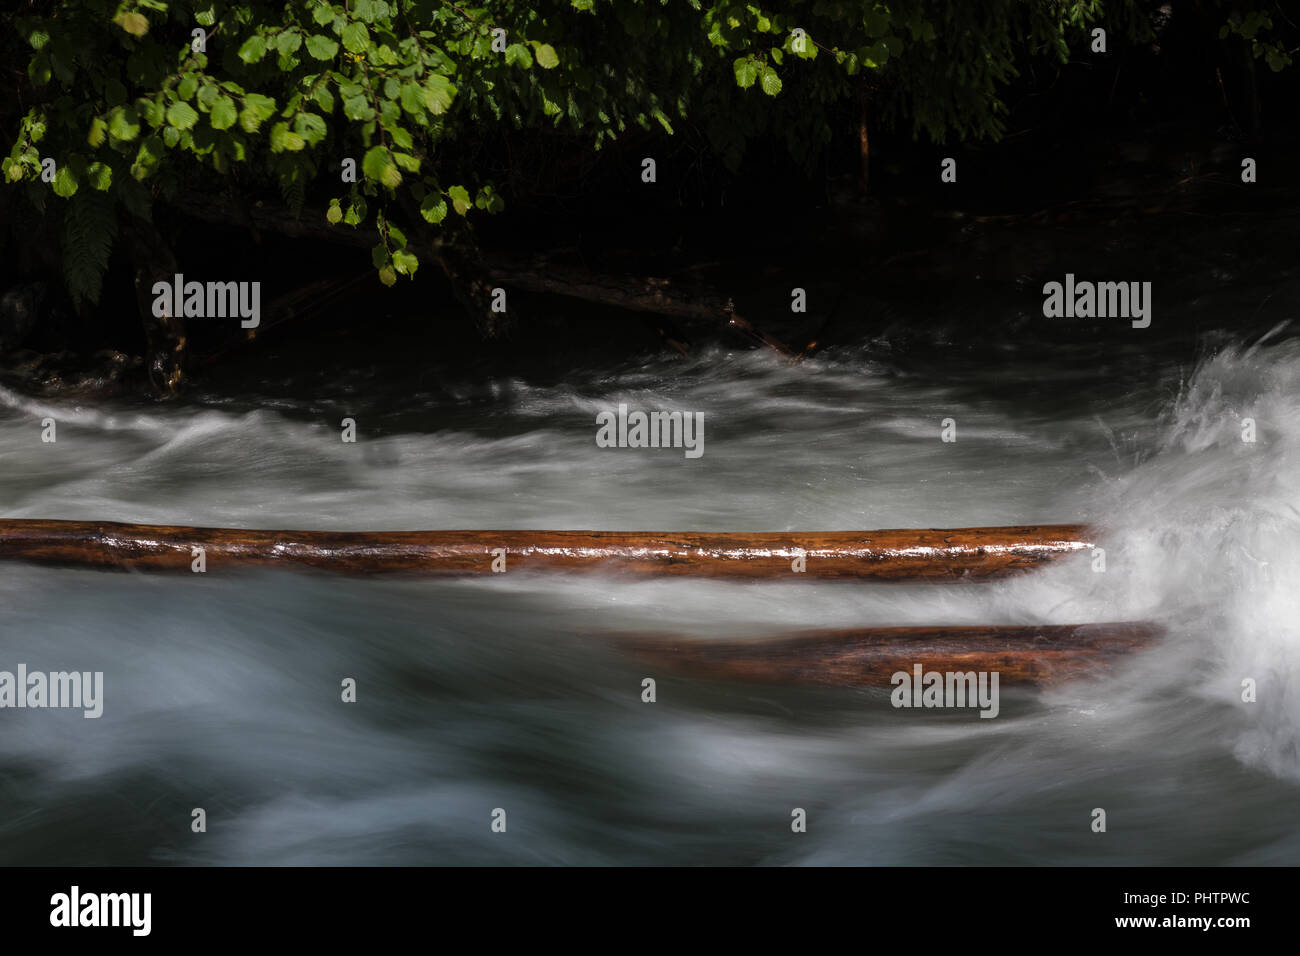 Tree logs in a river, Gorge in Austria, Talbachklamm, Schladming, Untertal, Austria Stock Photo